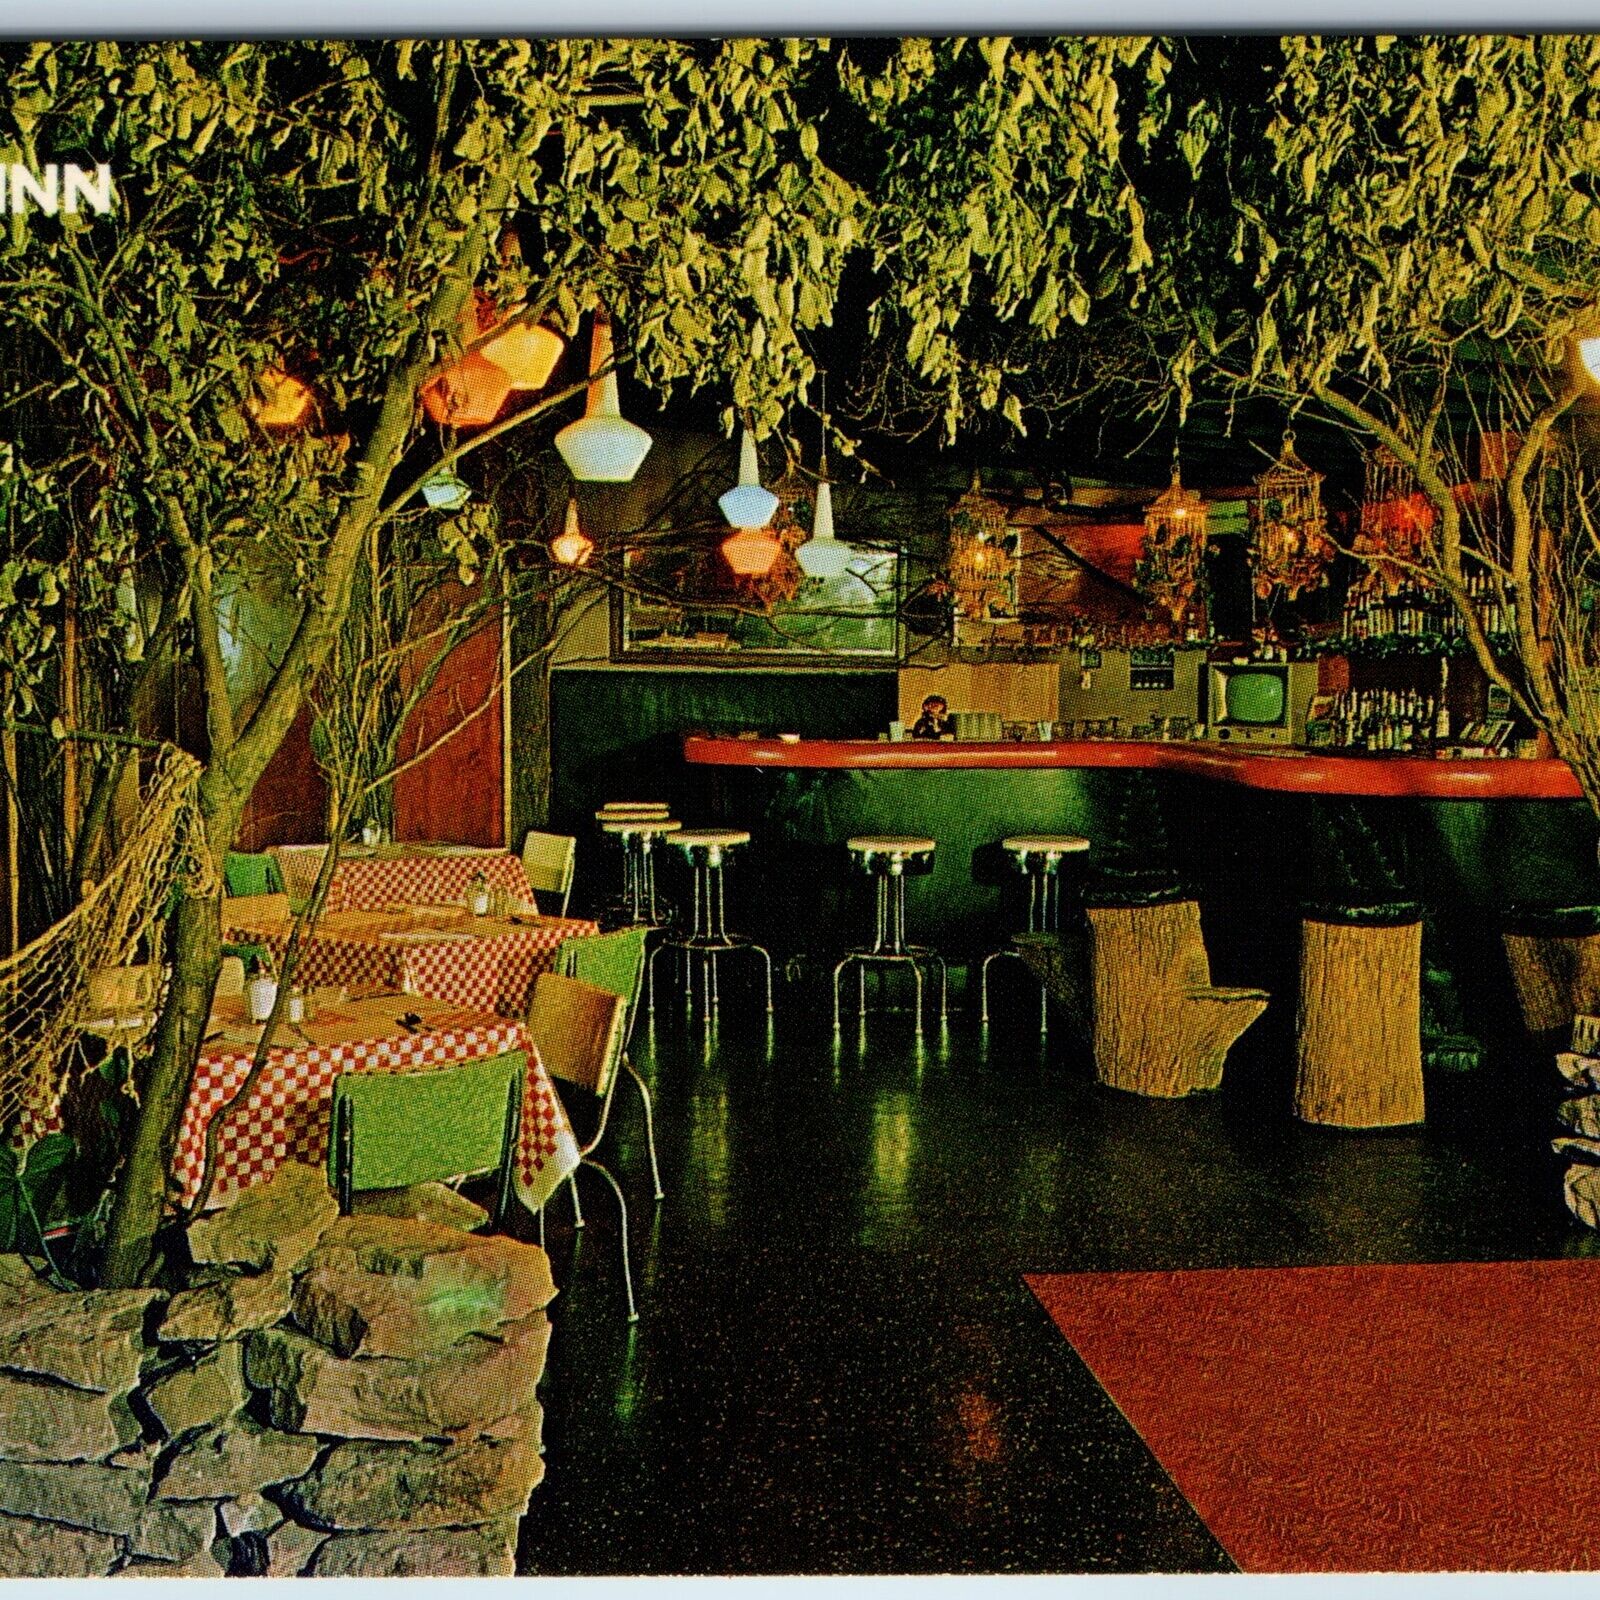 c1960s Independence IA 20 Jungle InnBar Gayla Ballroom Advertising Postcard A198